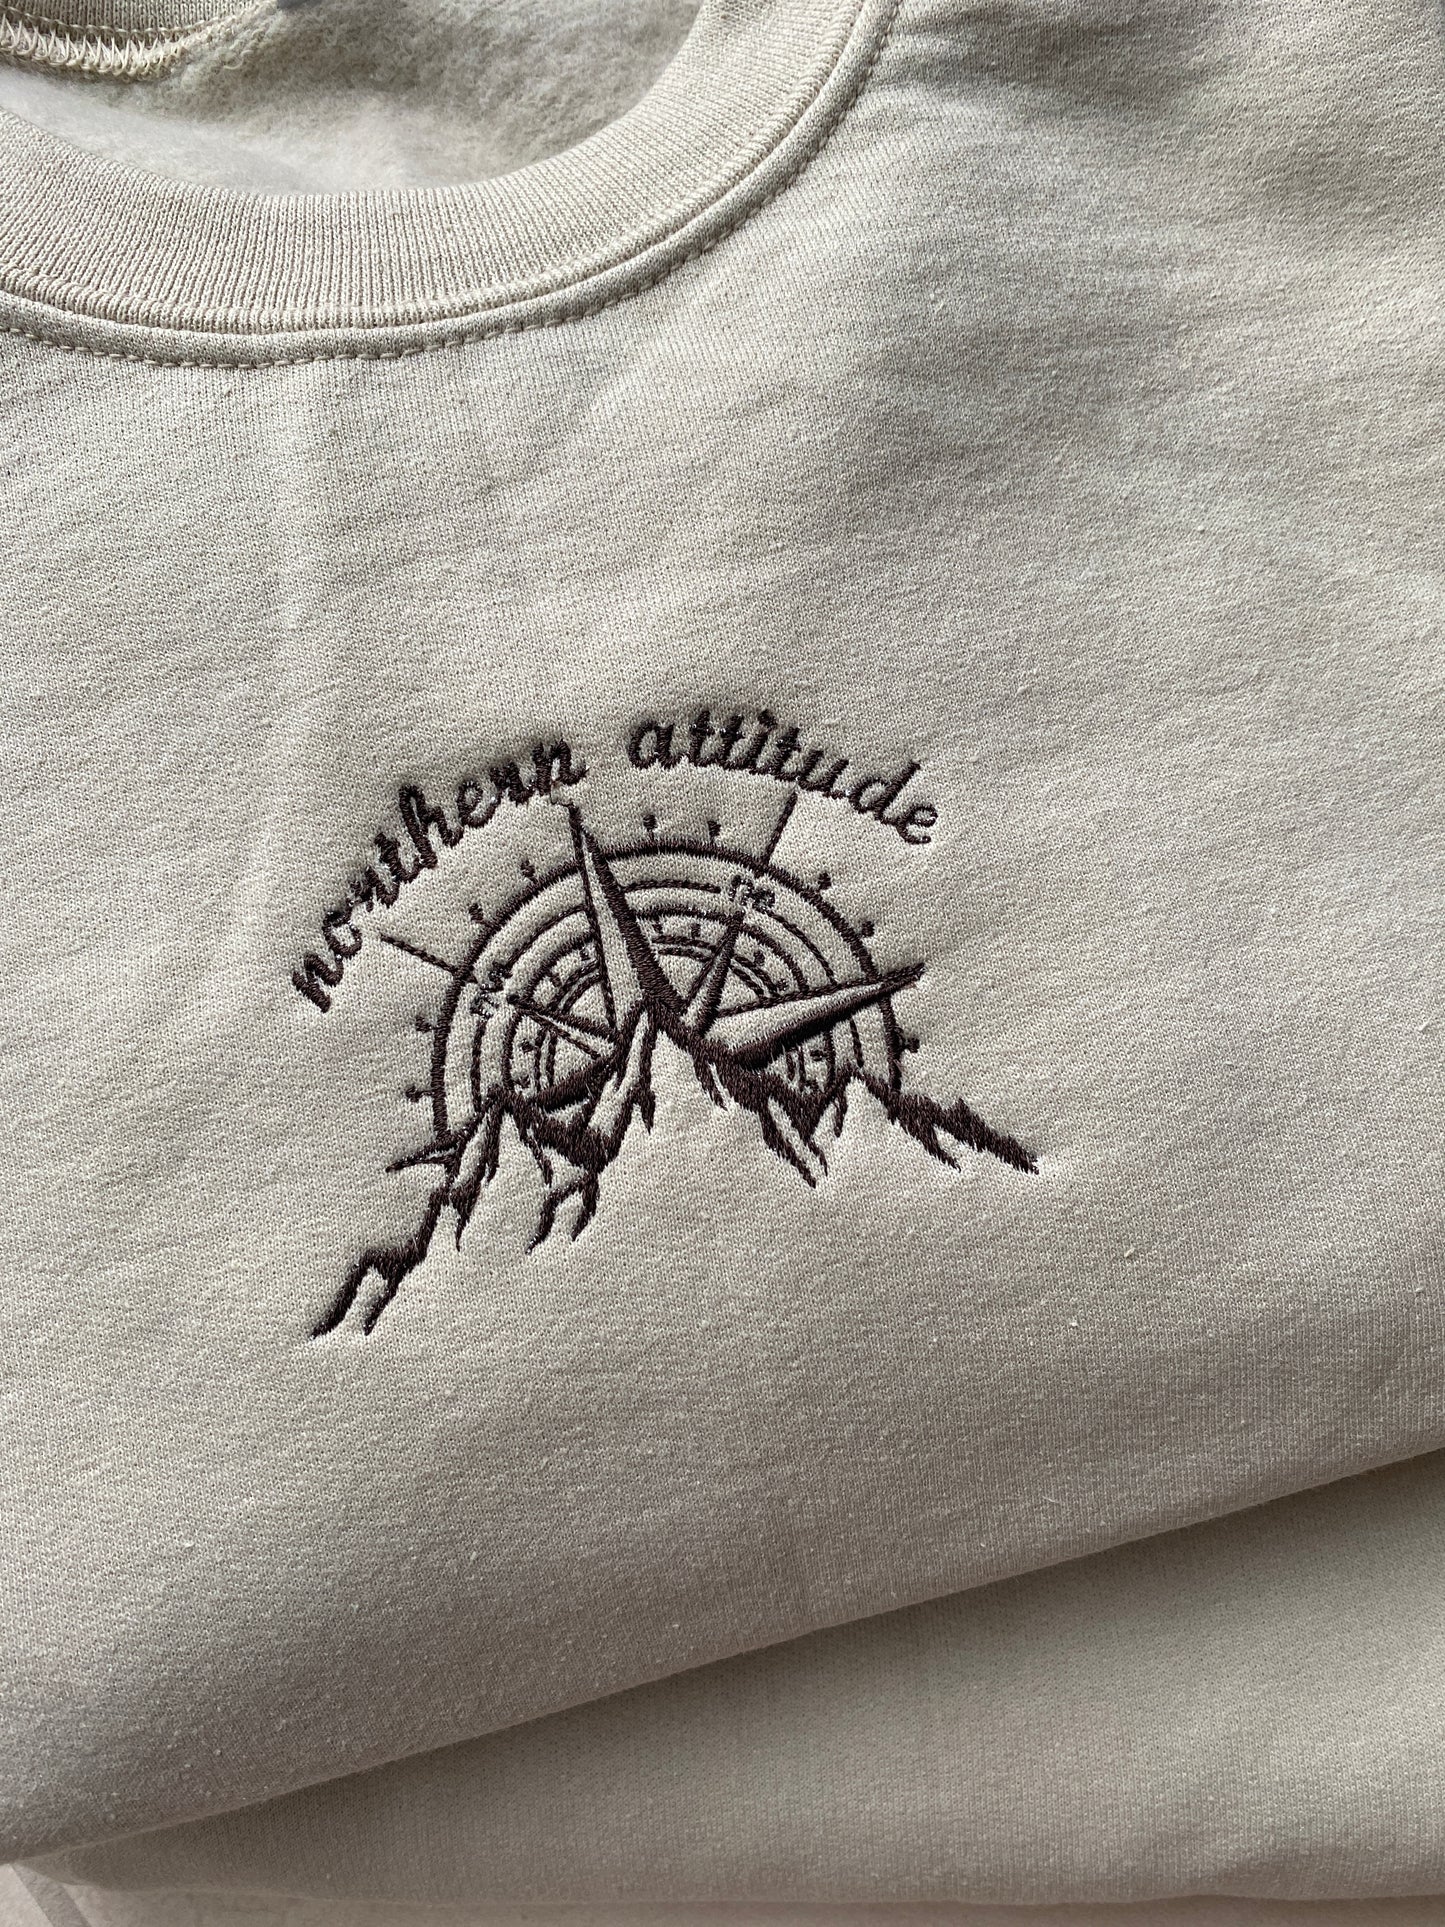 Northern Attitude Embroidered Sweatshirt